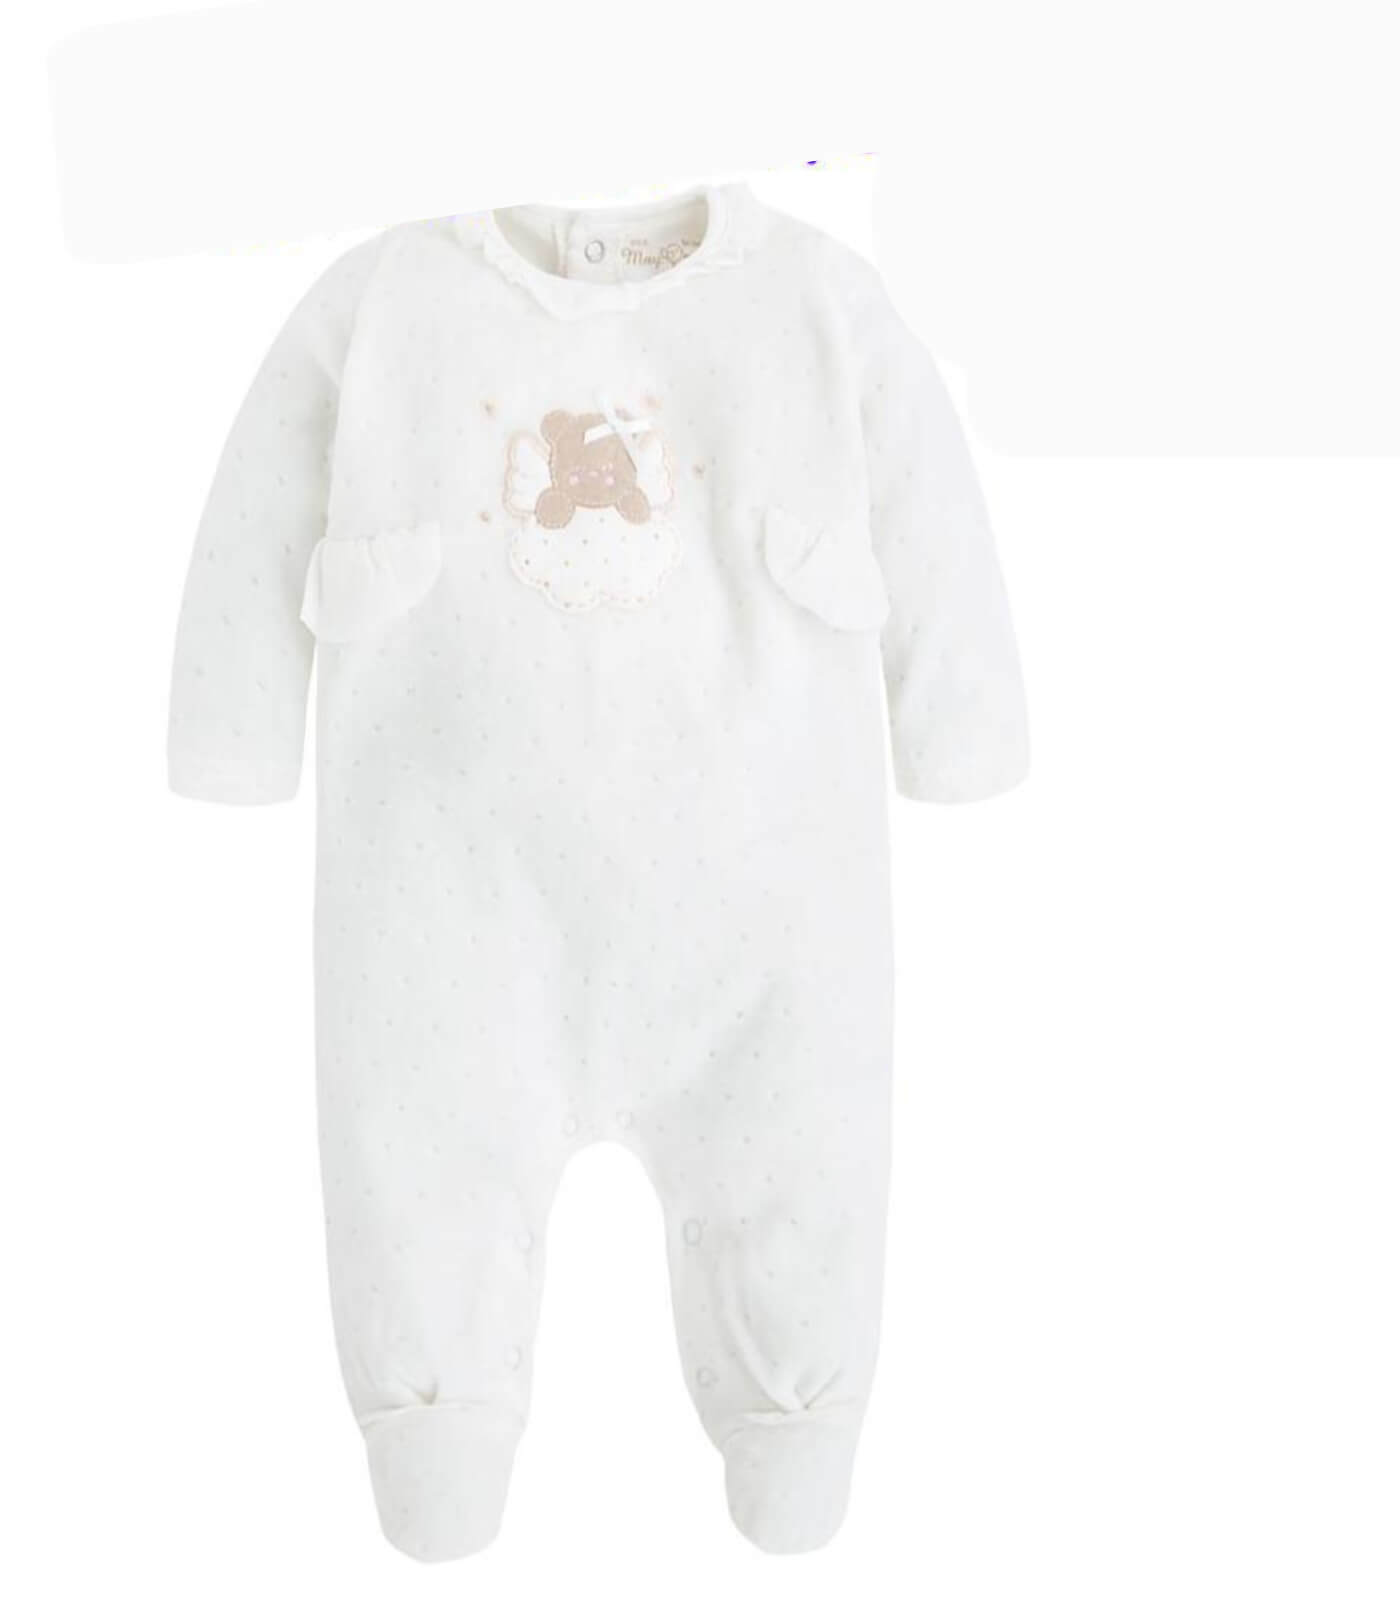 Pijama invierno bebé 2739 crudo - Koko's Peques